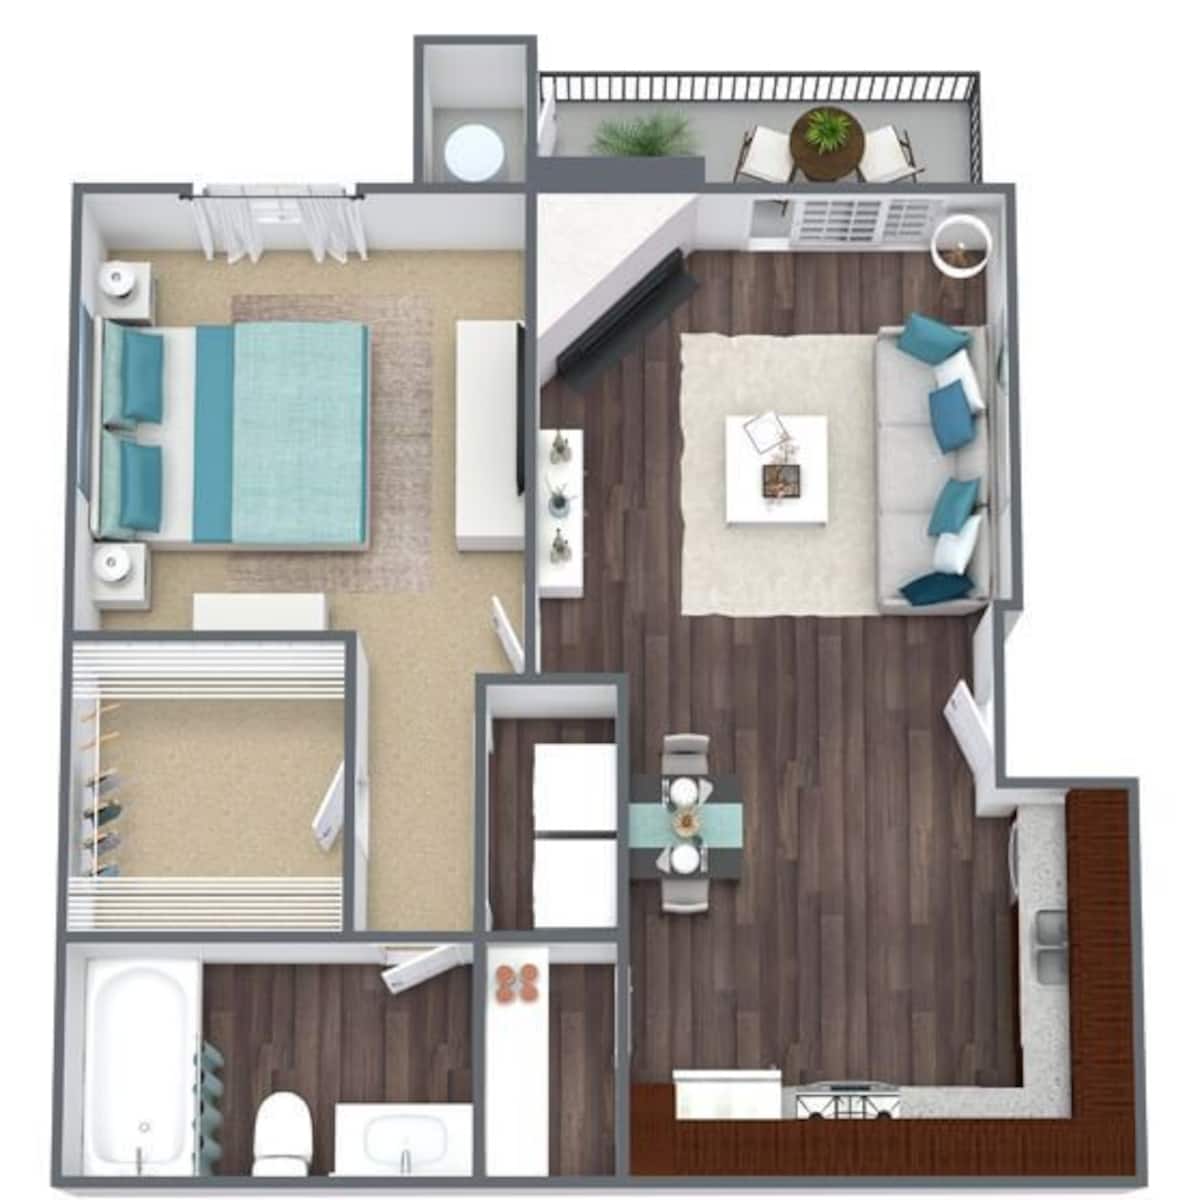 Floorplan diagram for Jade, showing 1 bedroom